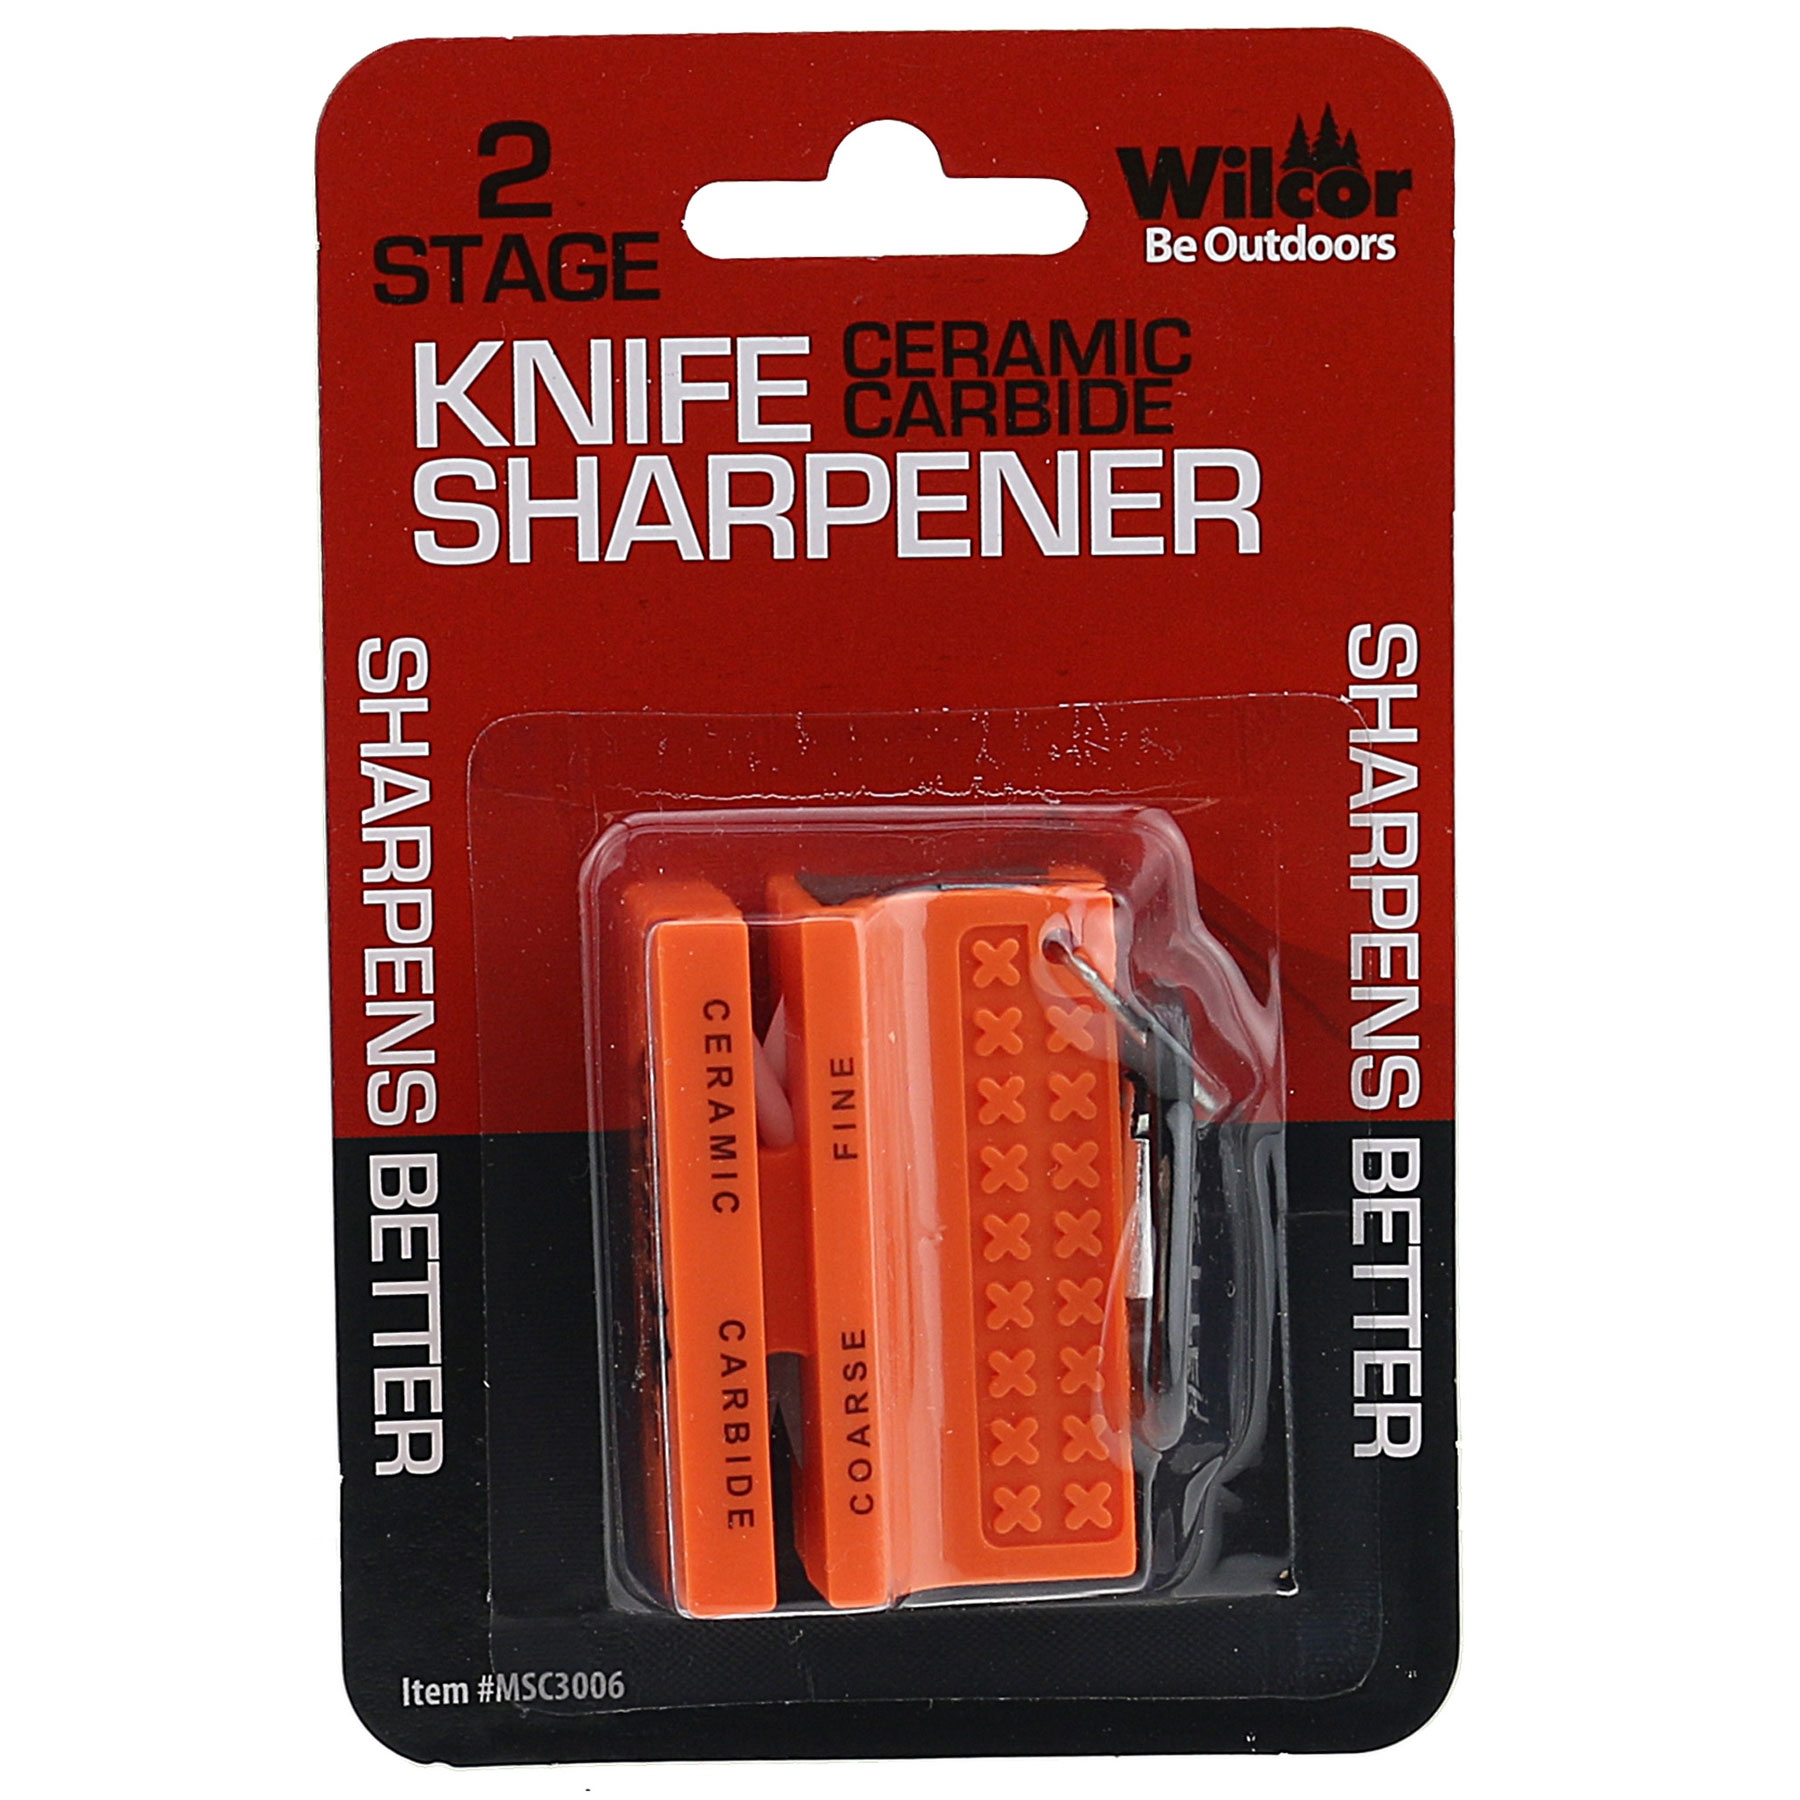 Speedy Sharp Carbide Knife Sharpener - BLUE